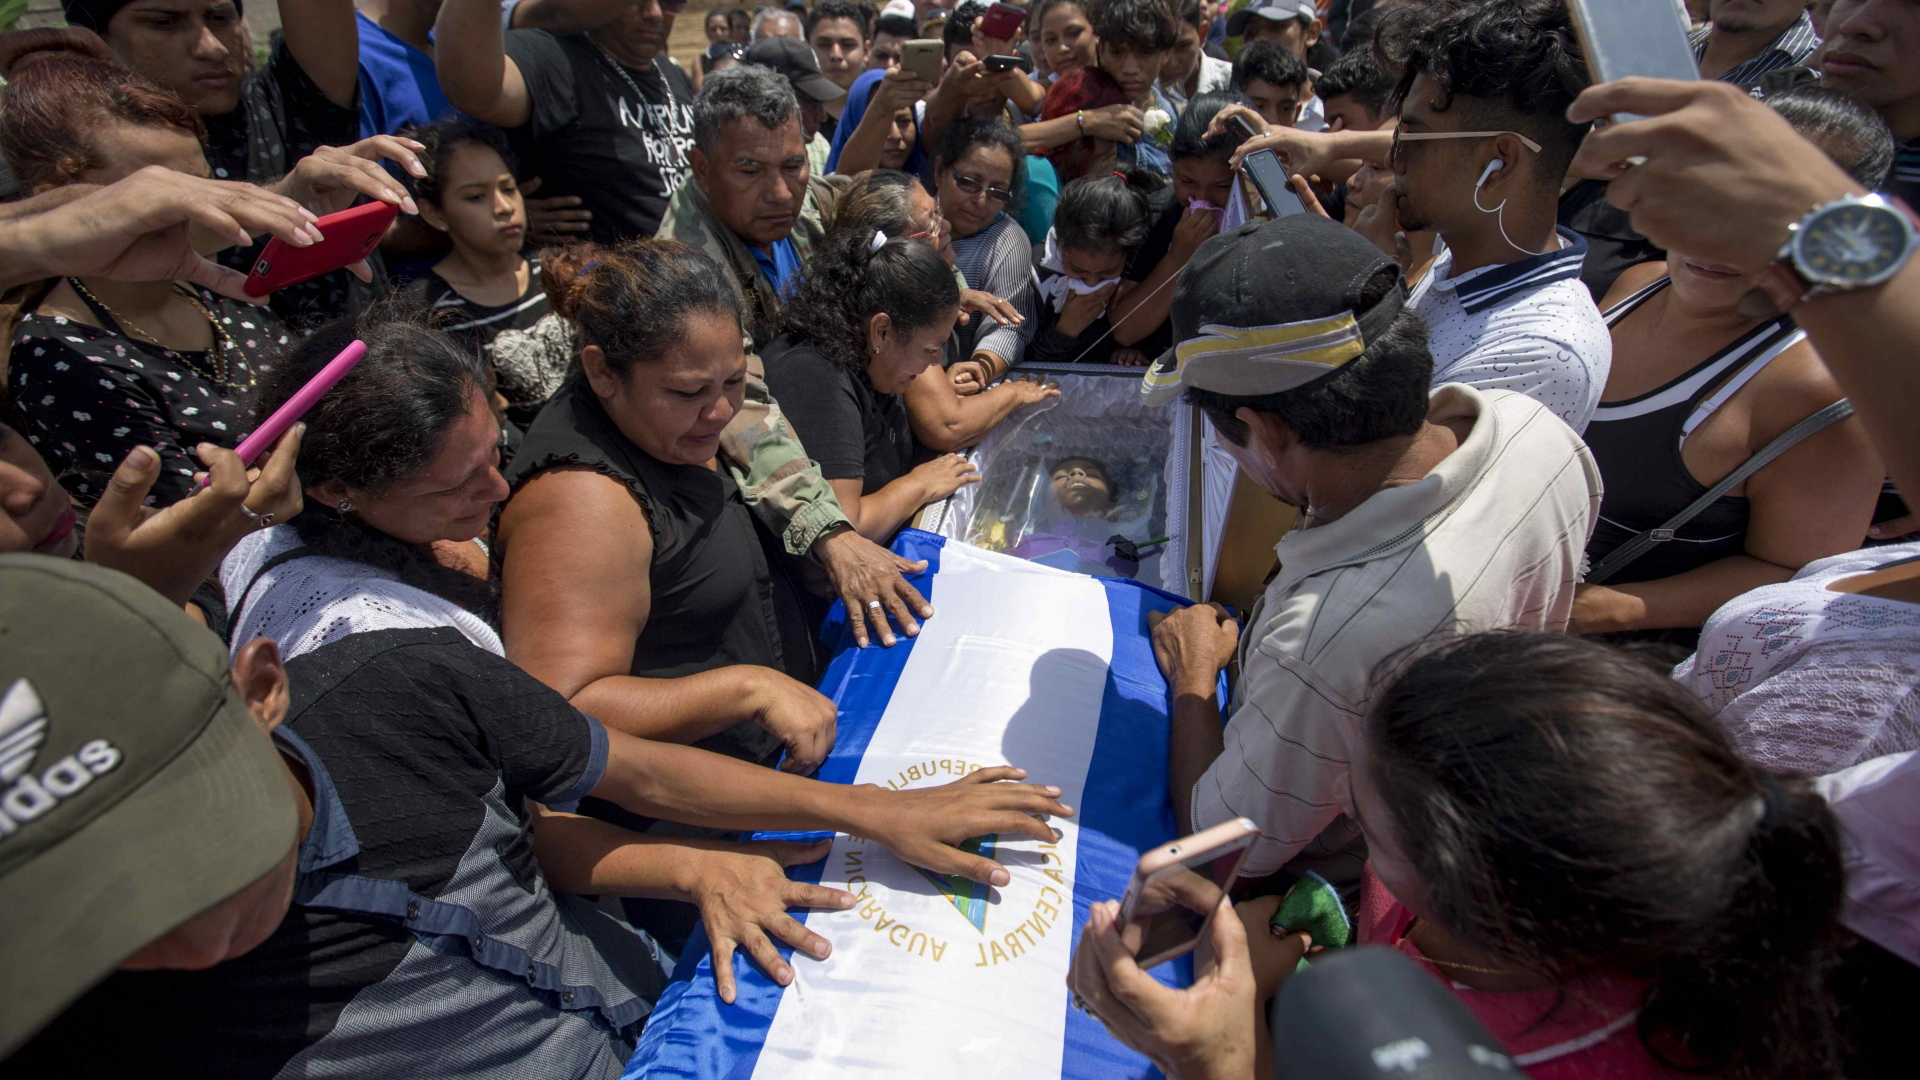 Beerdigung in Nicaragua | Jorge Torres/EPA-EFE/REX/Shutter